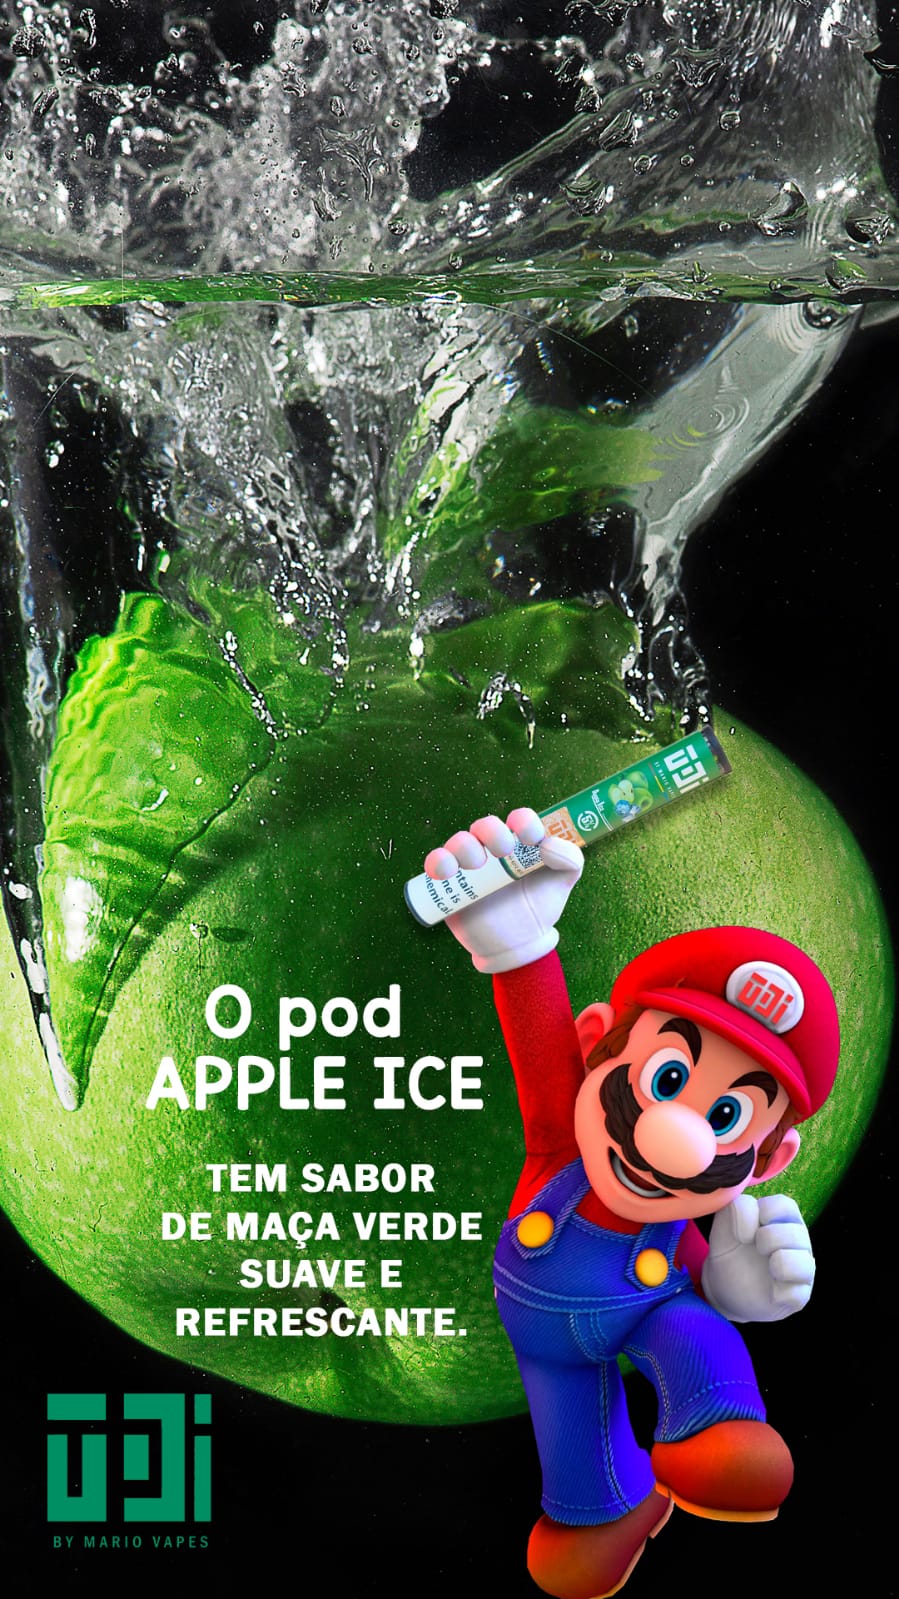 UDI Apple Ice